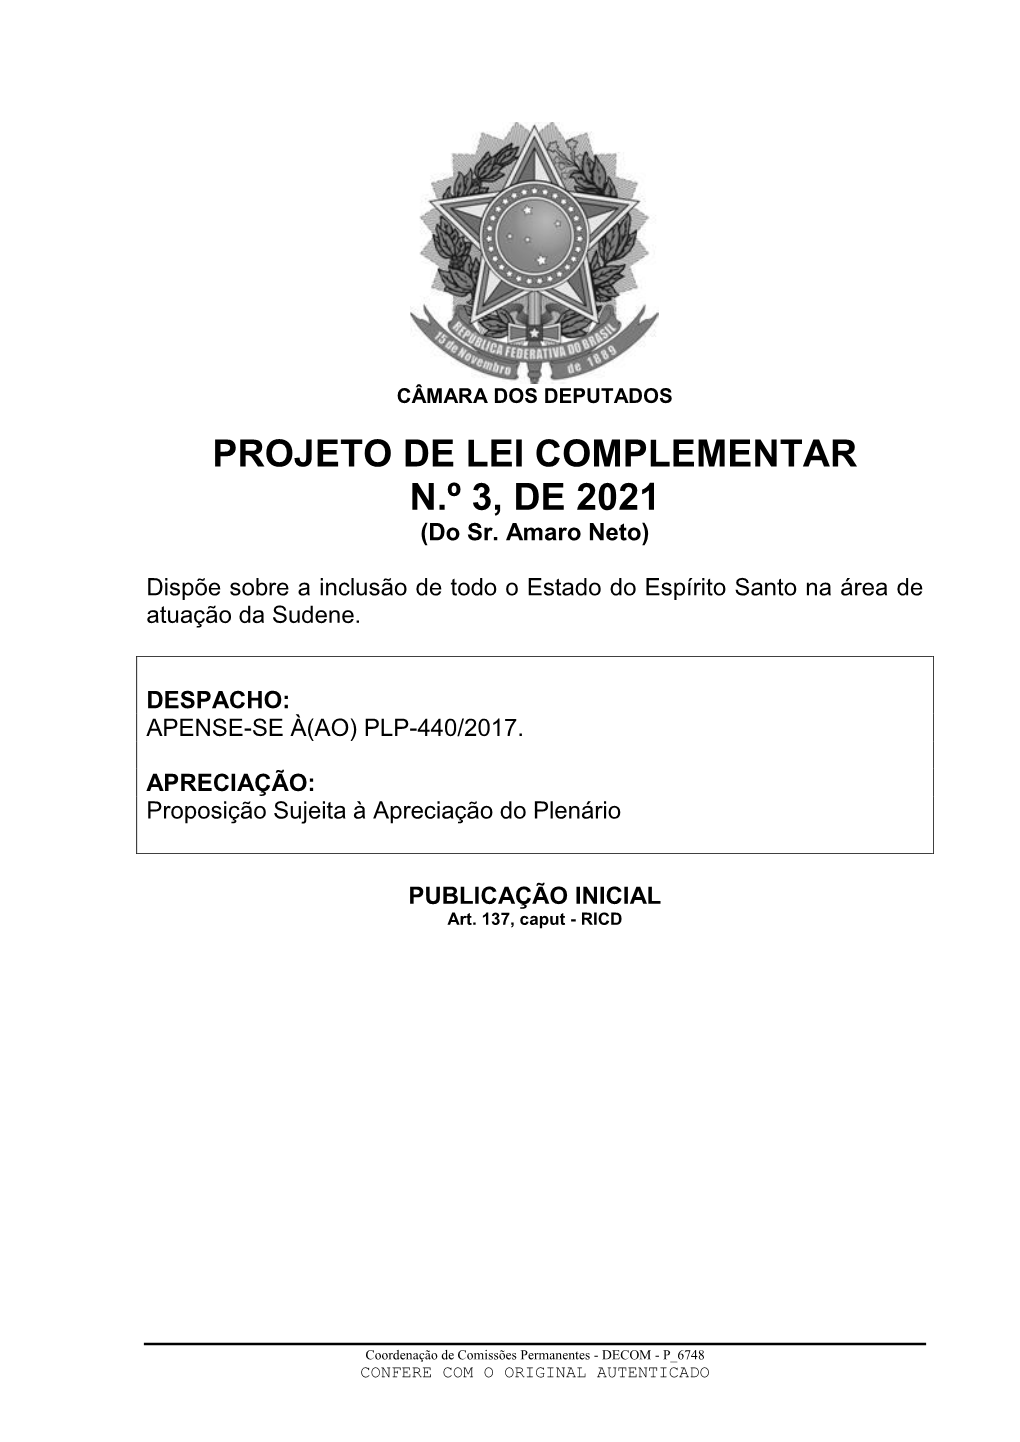 PROJETO DE LEI COMPLEMENTAR N.º 3, DE 2021 (Do Sr